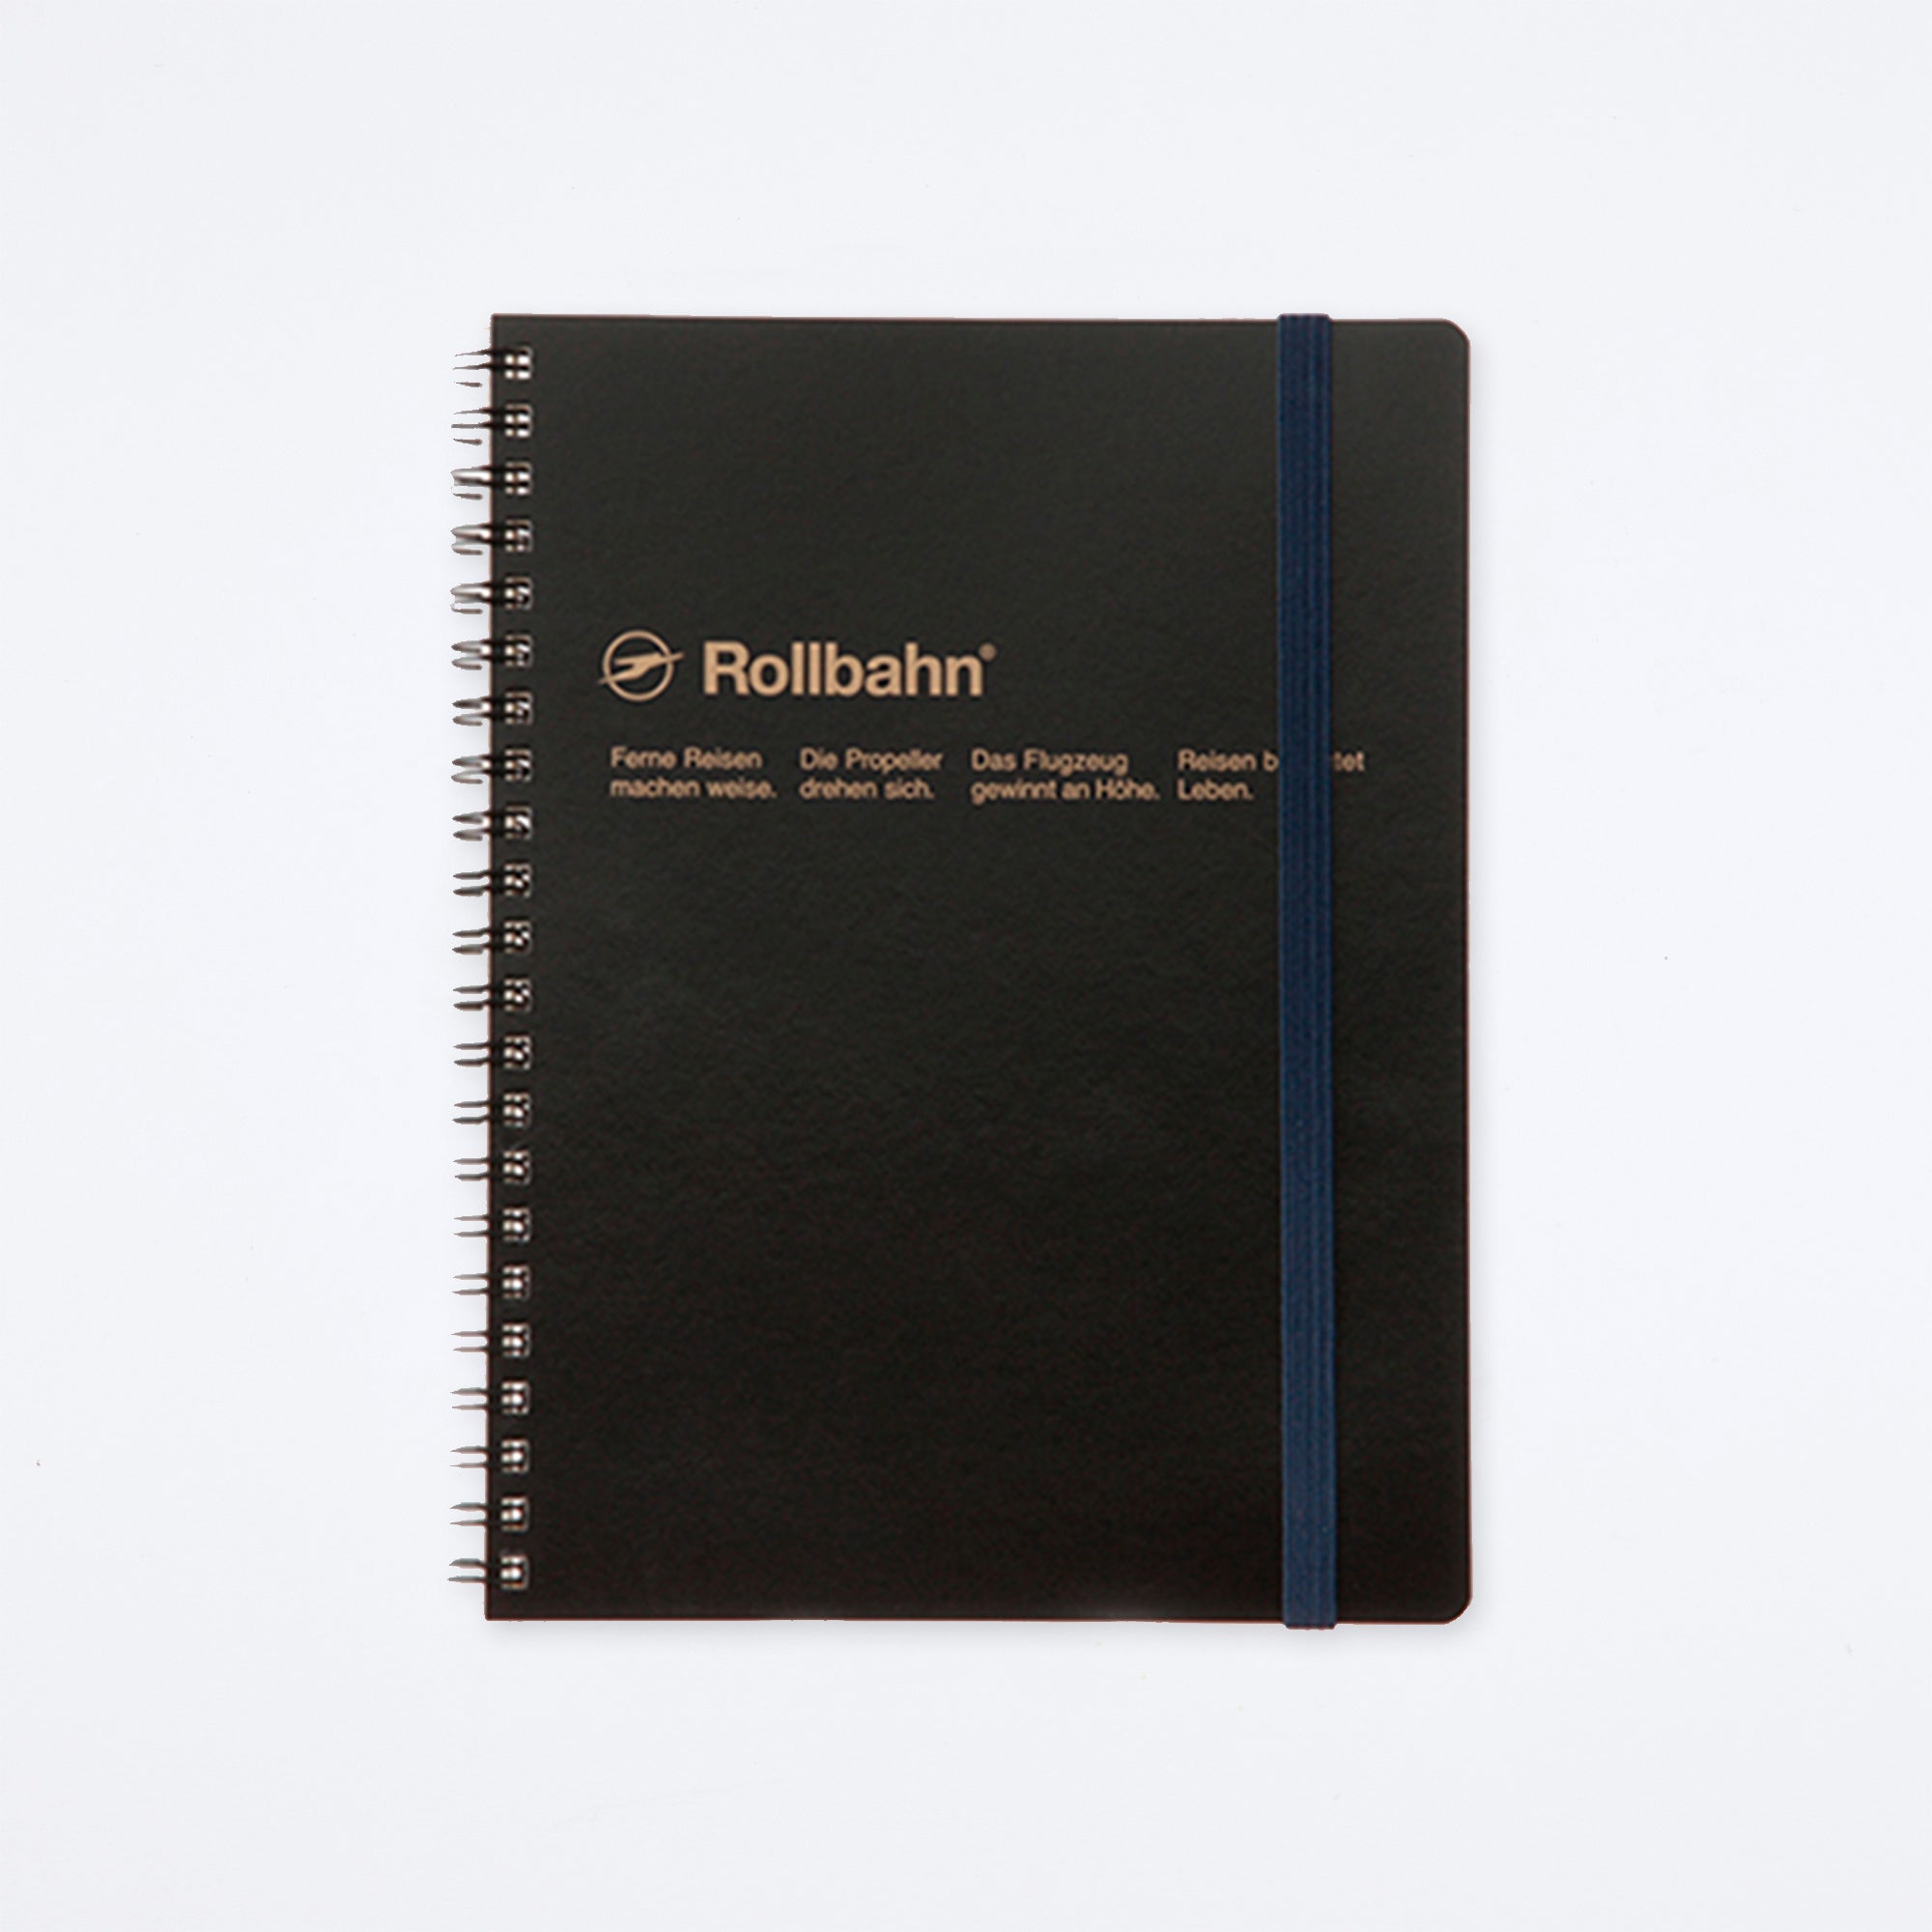 Rollbahn Spiral A5 Notebook